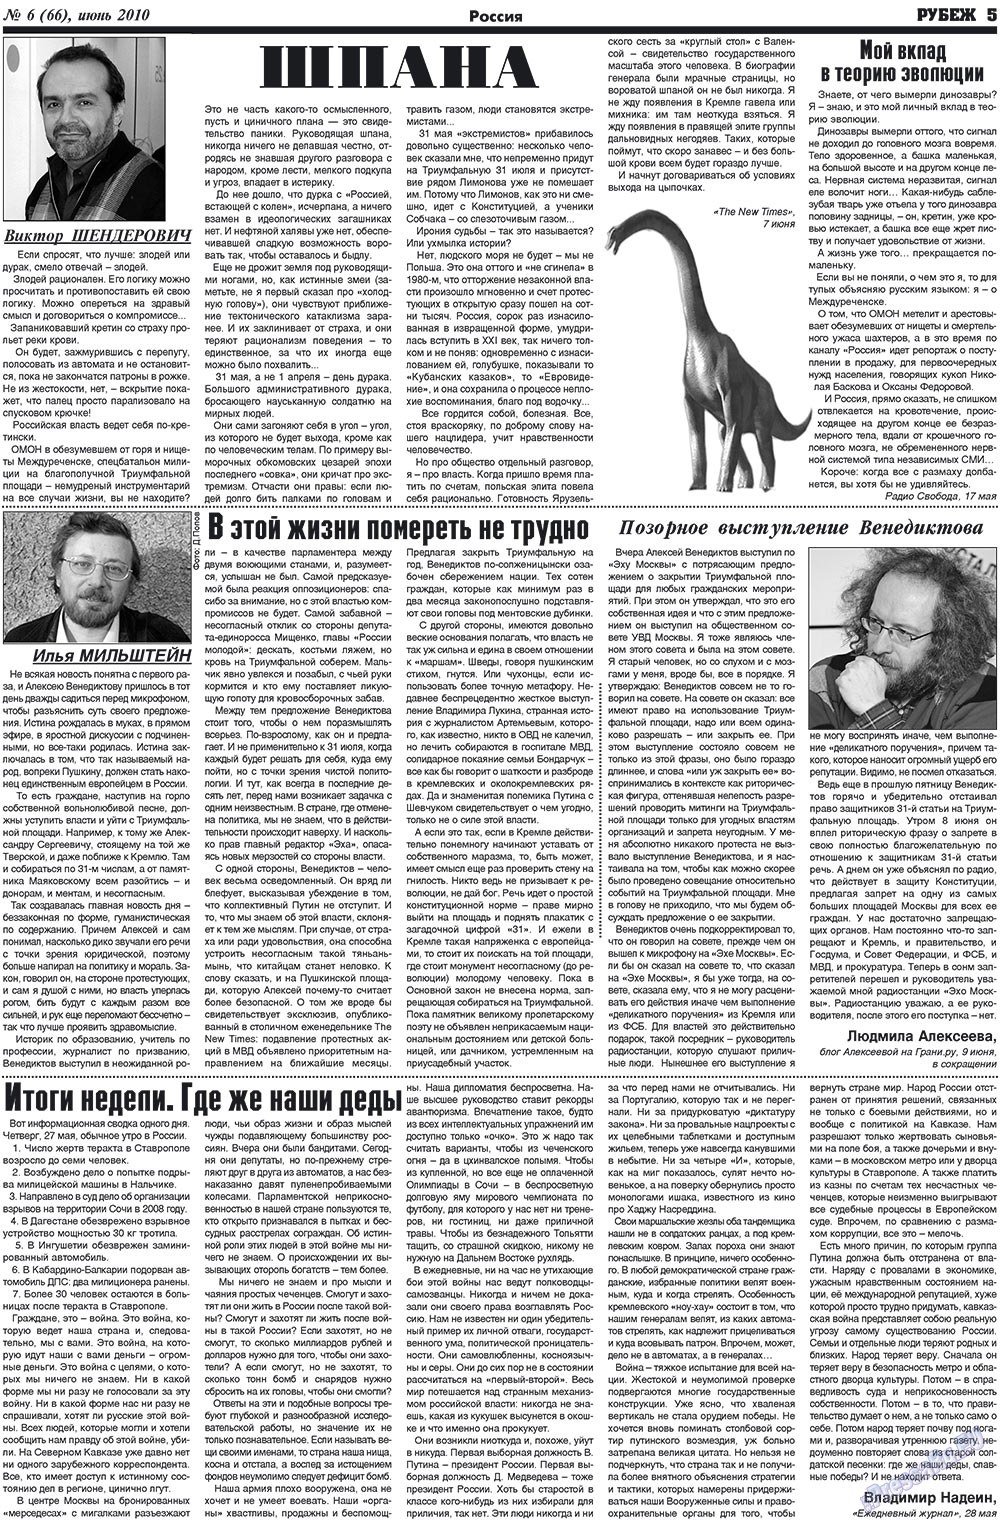 Рубеж, газета. 2010 №6 стр.5